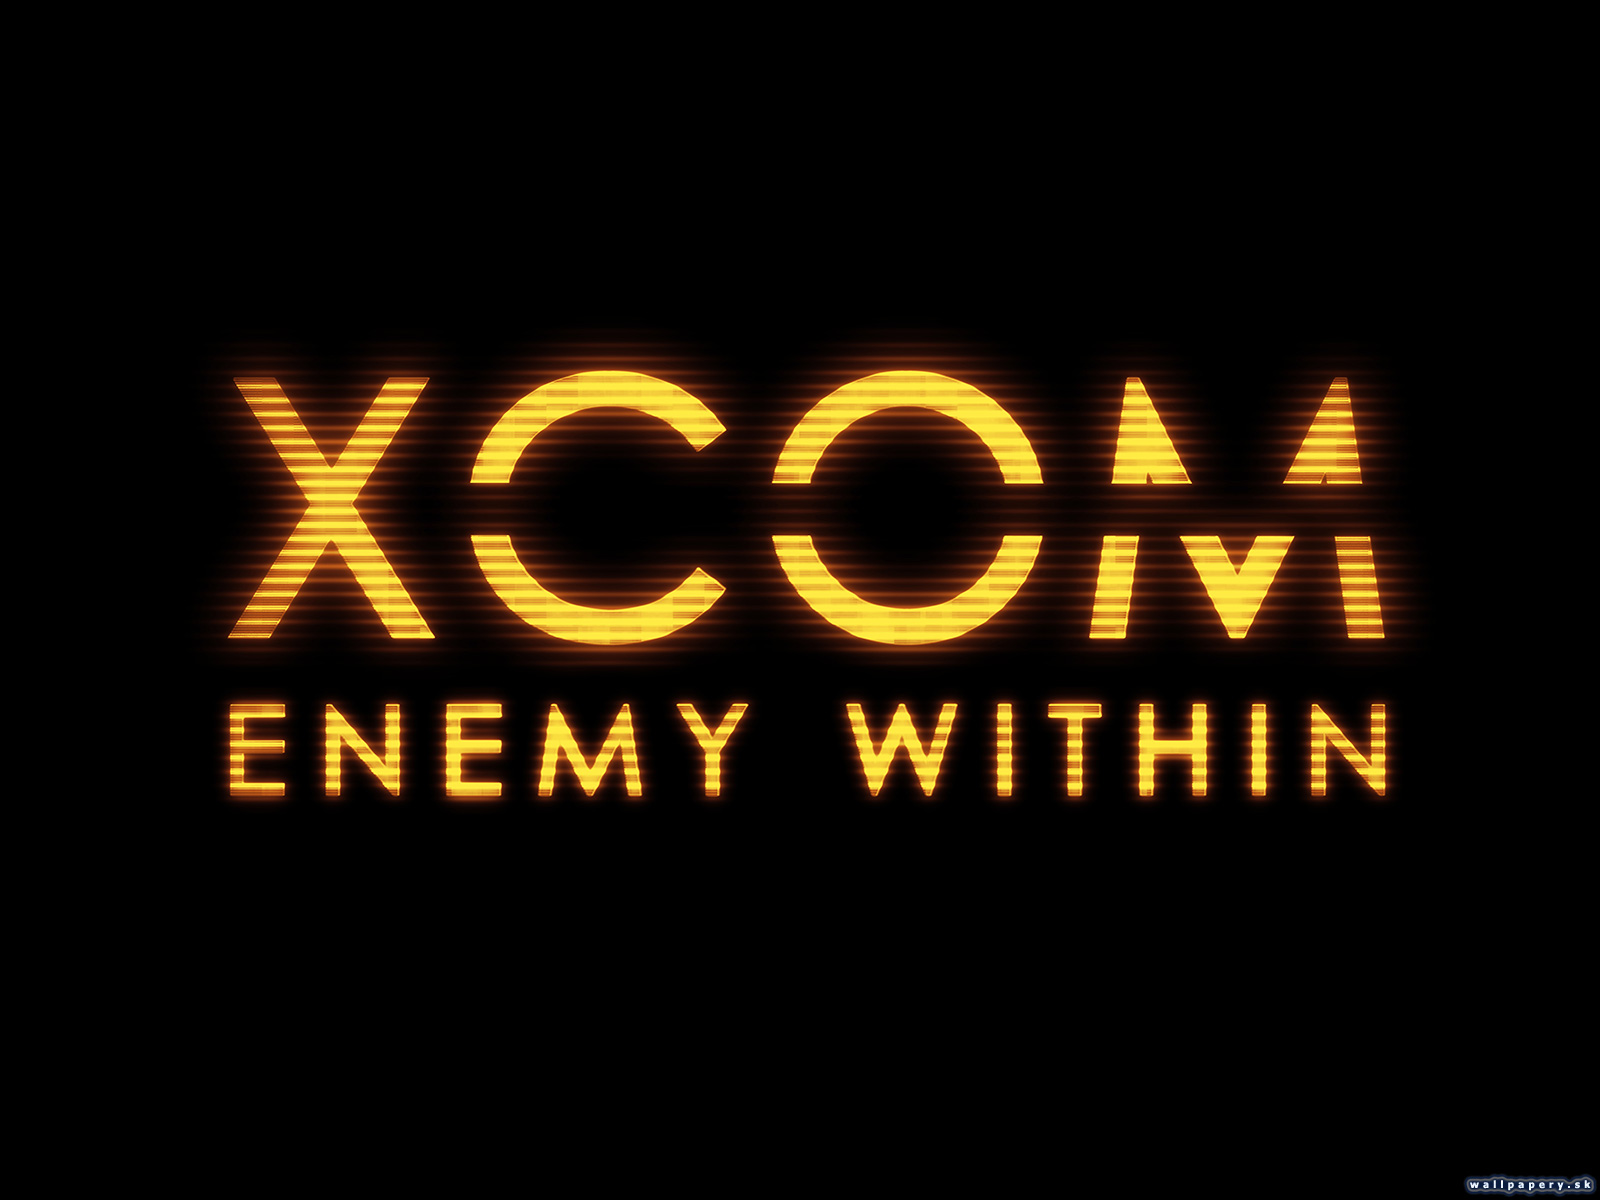 XCOM: Enemy Within - wallpaper 3